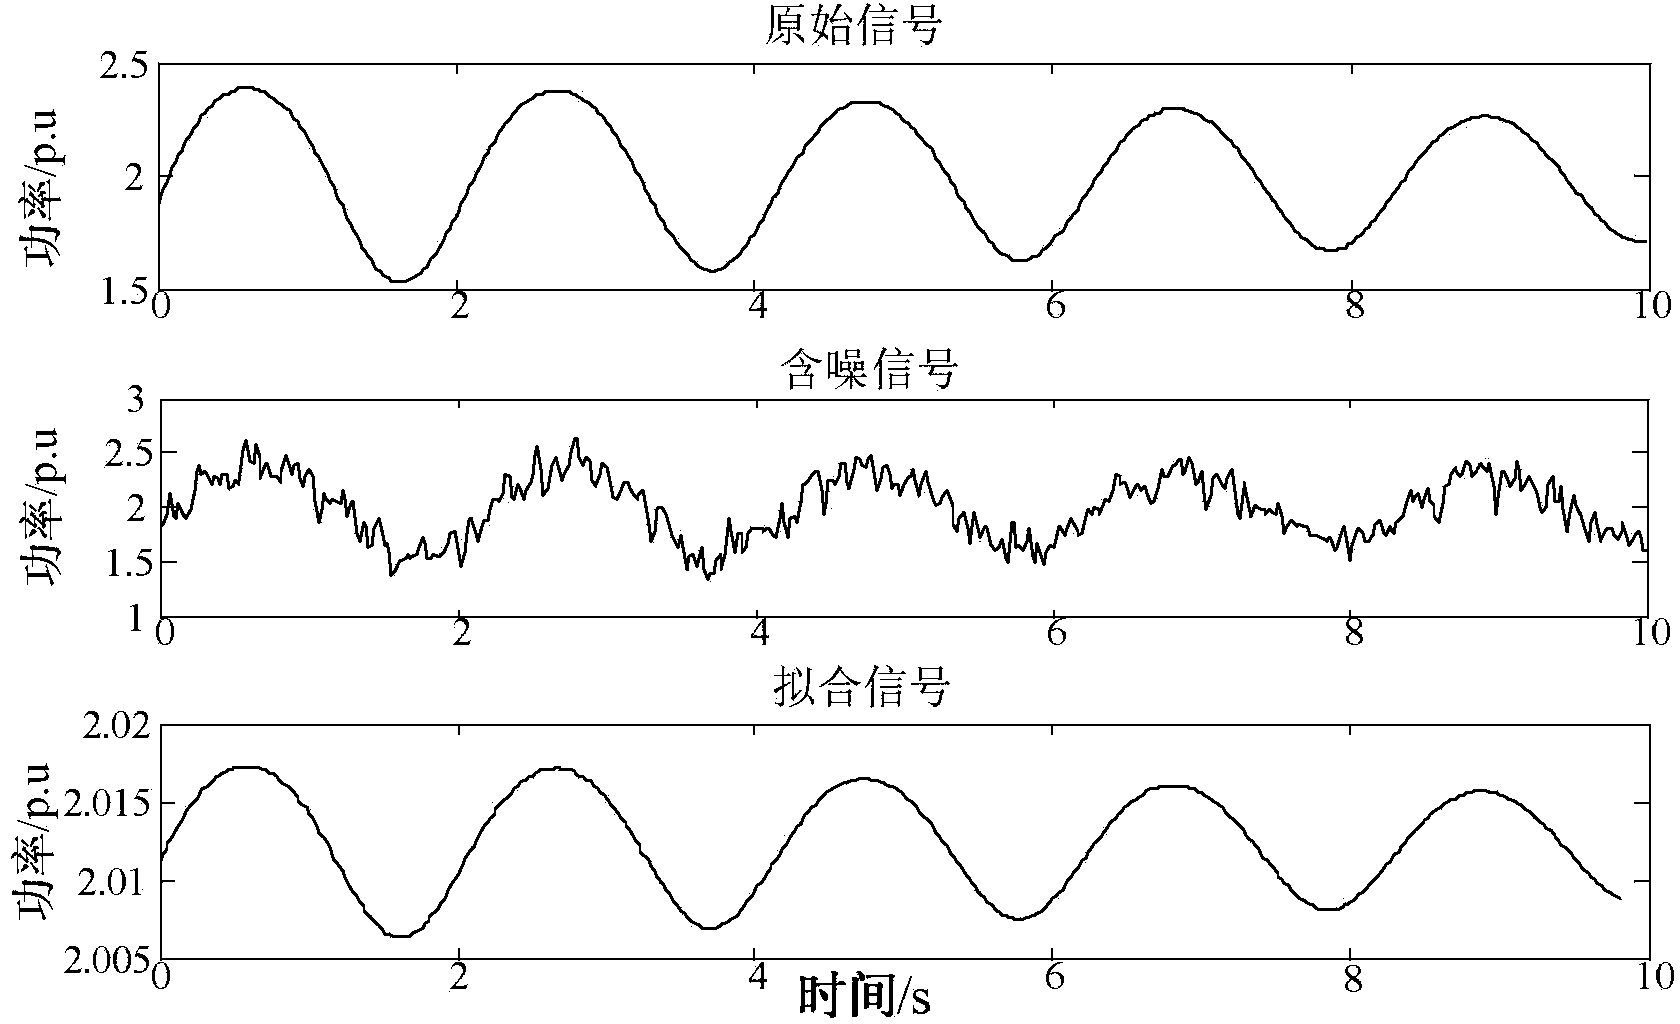 Low frequency oscillation online identification method based on cross-correlation function denoising algorithm